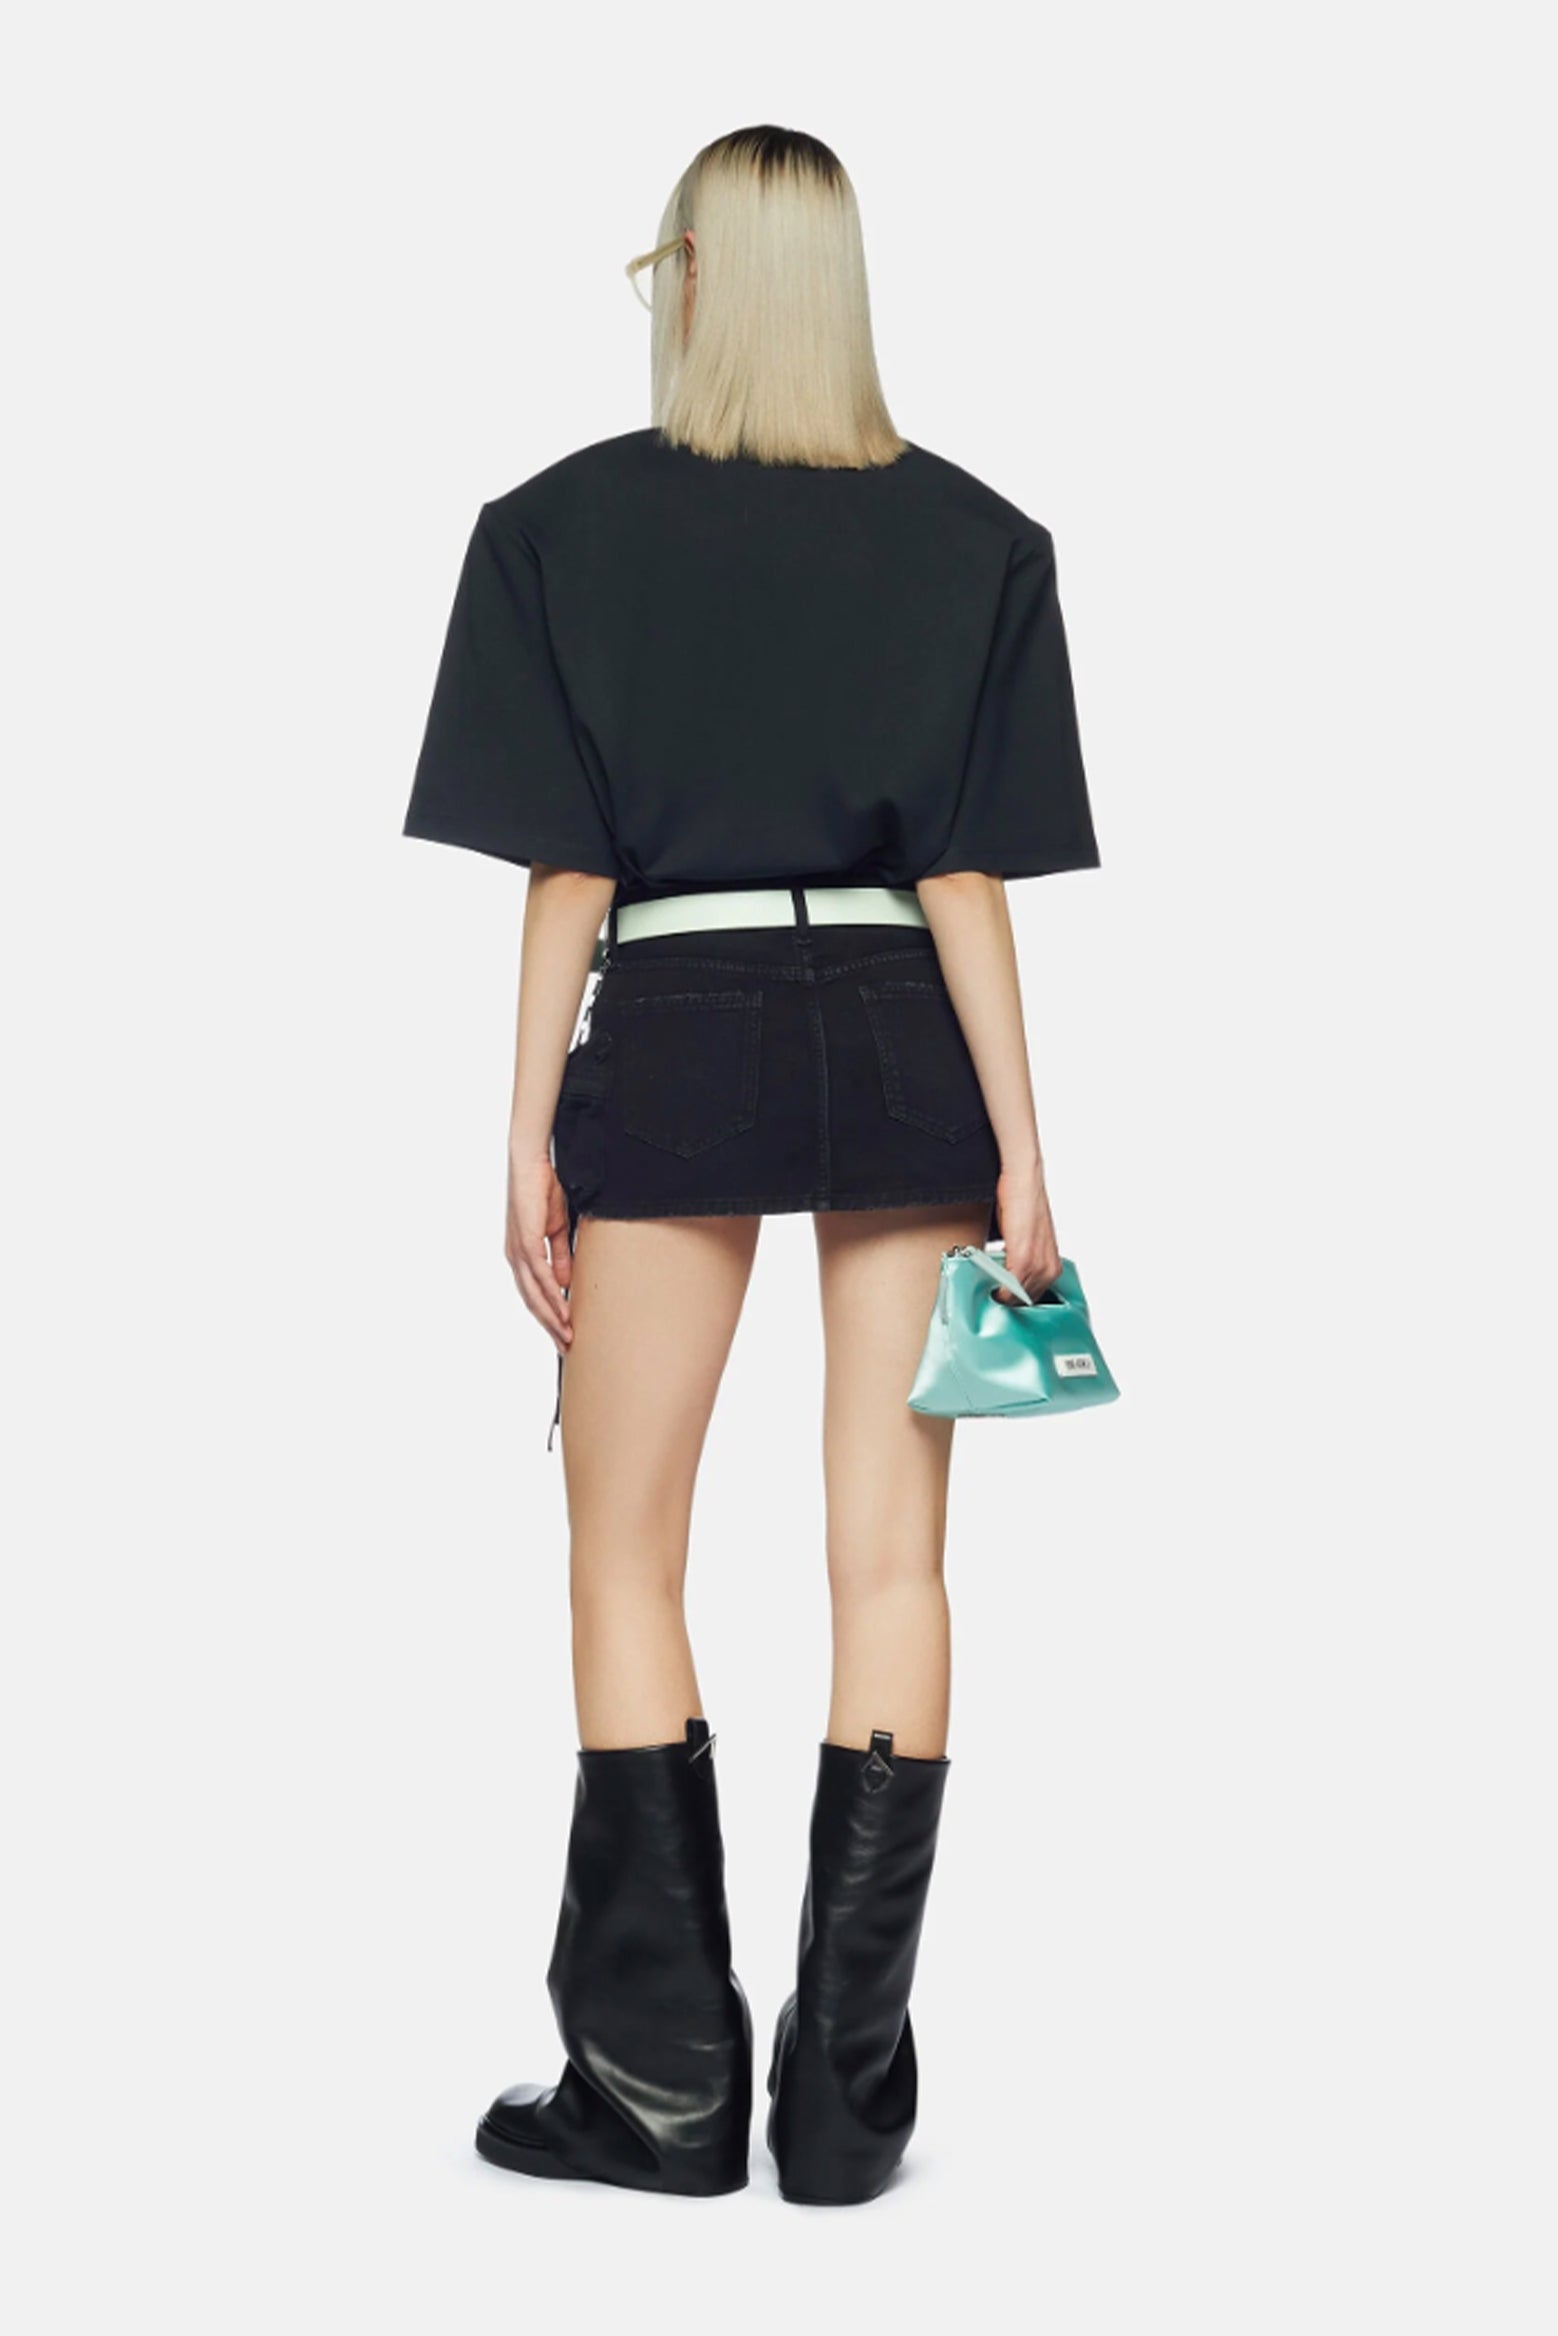 The Attico Fay Mini Skirt in Black available at The New Trend Australia